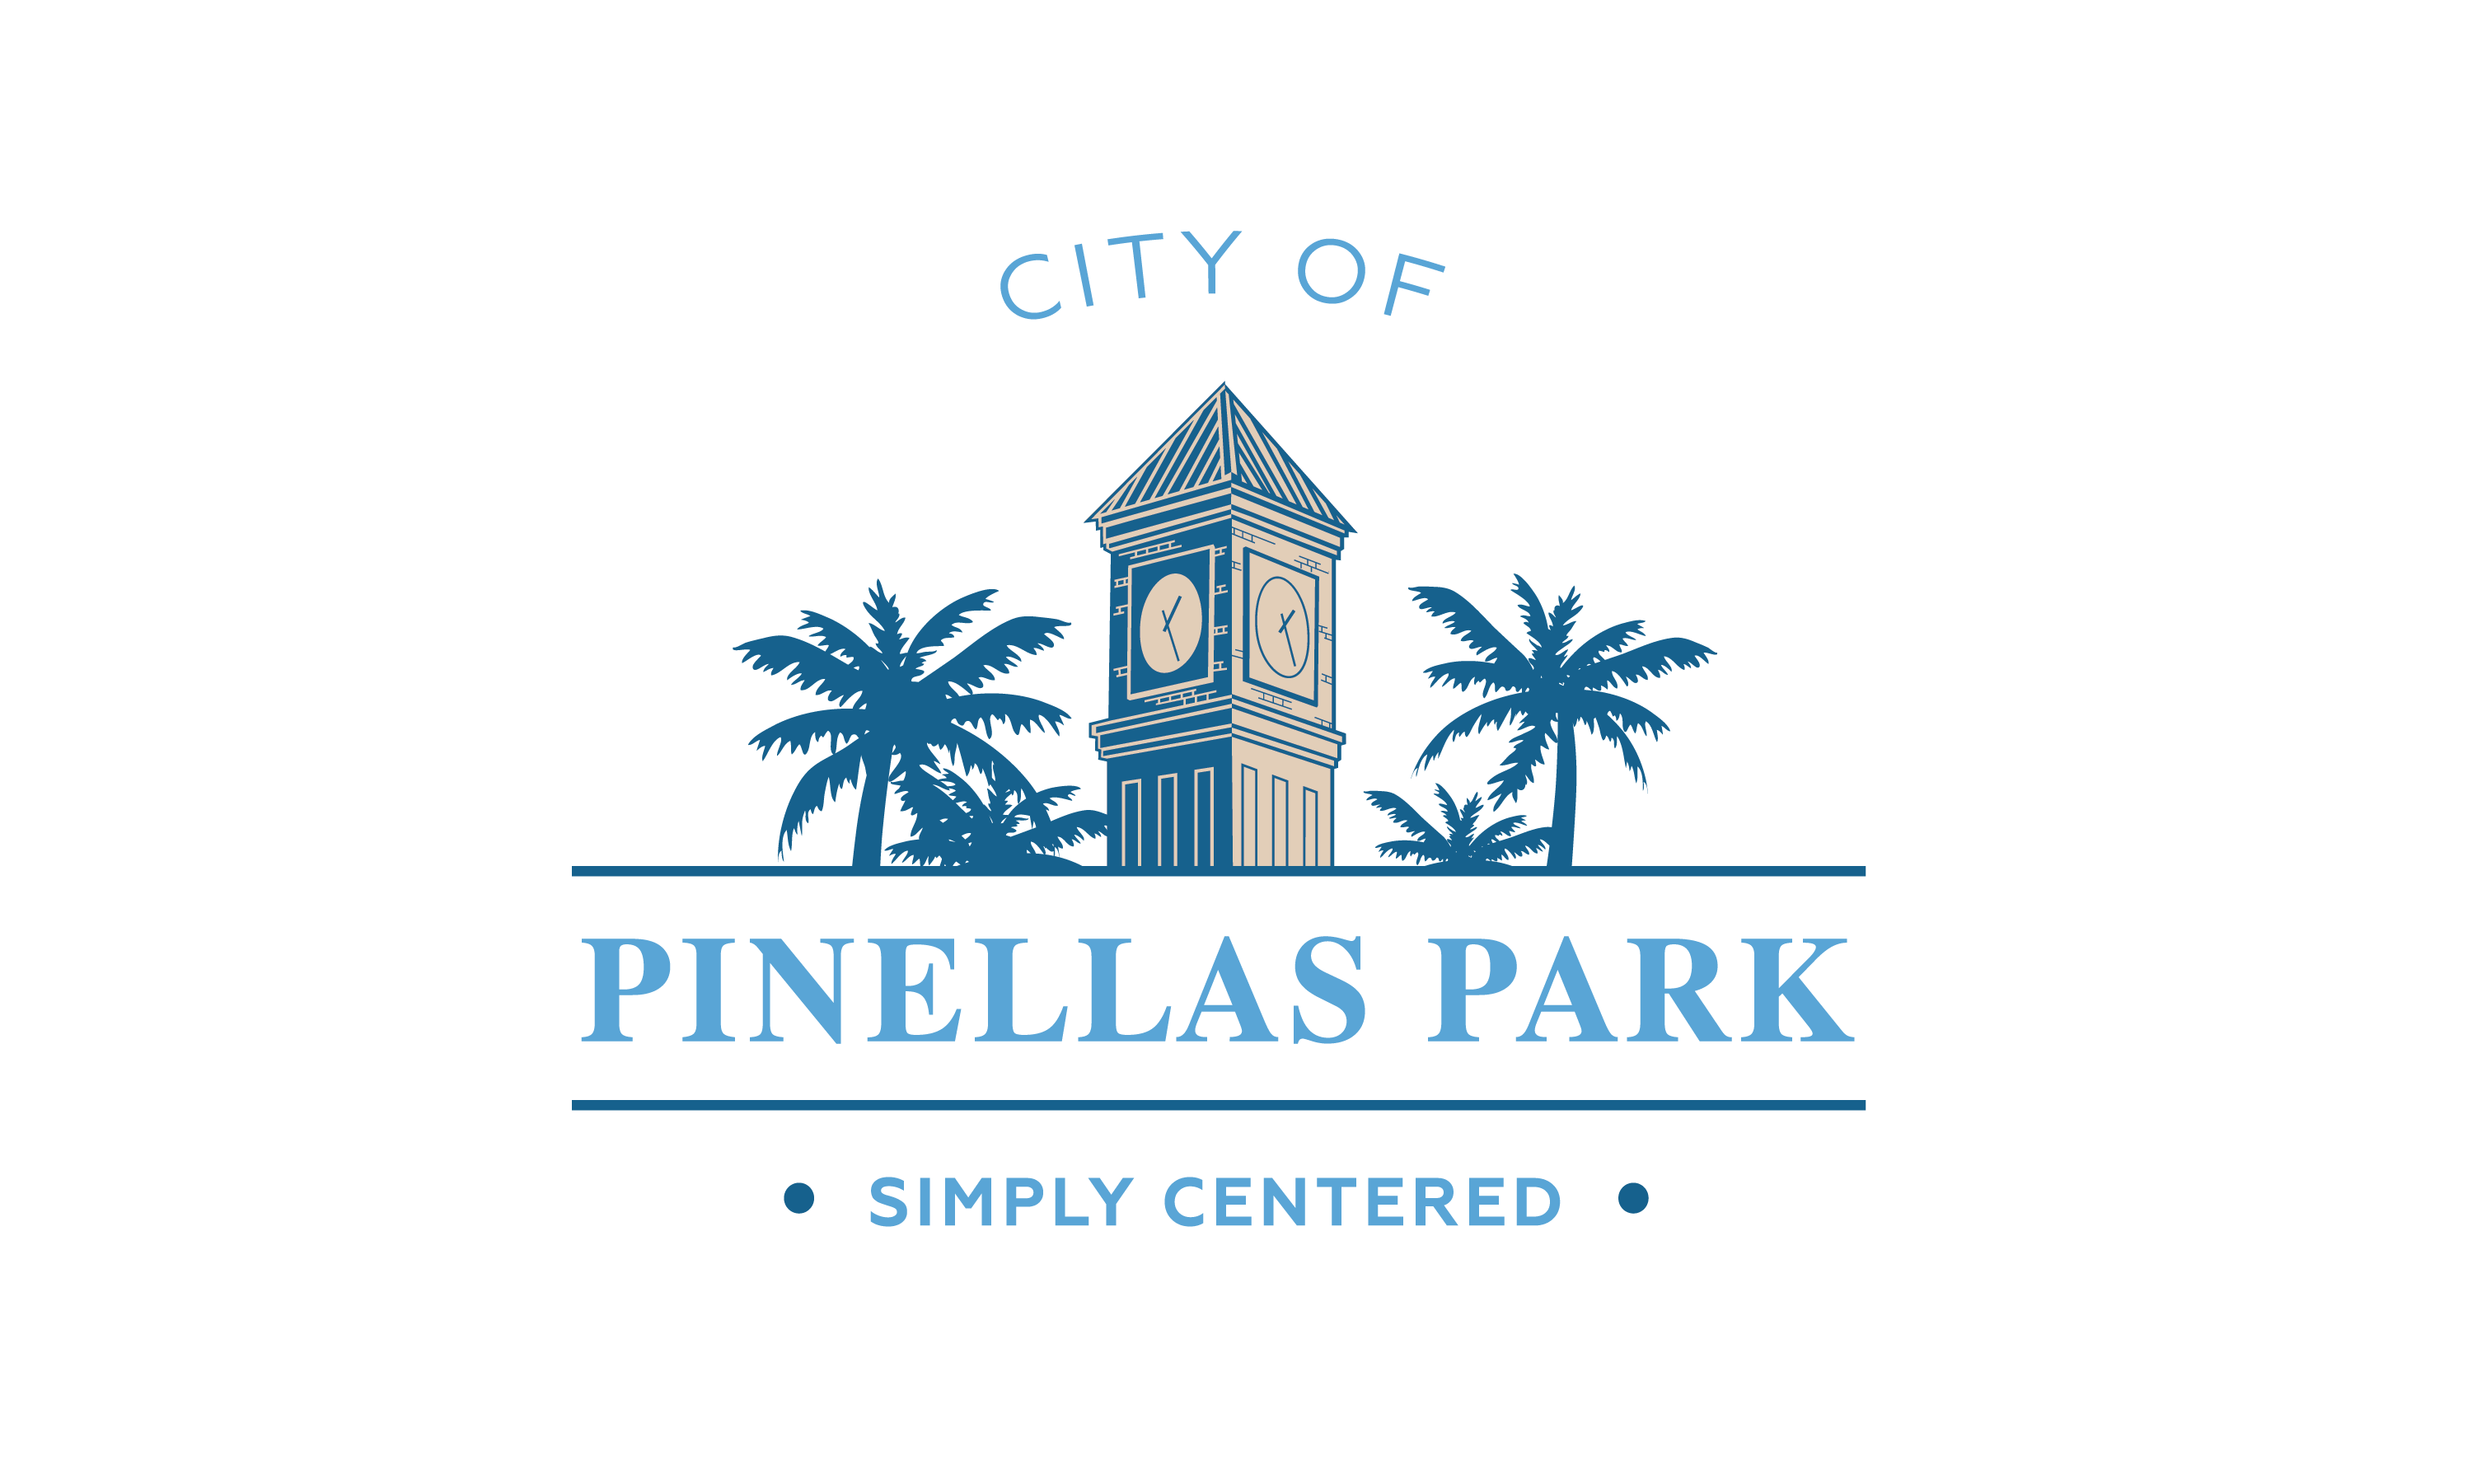 City of Pinellas Park Planning & Development Services Division